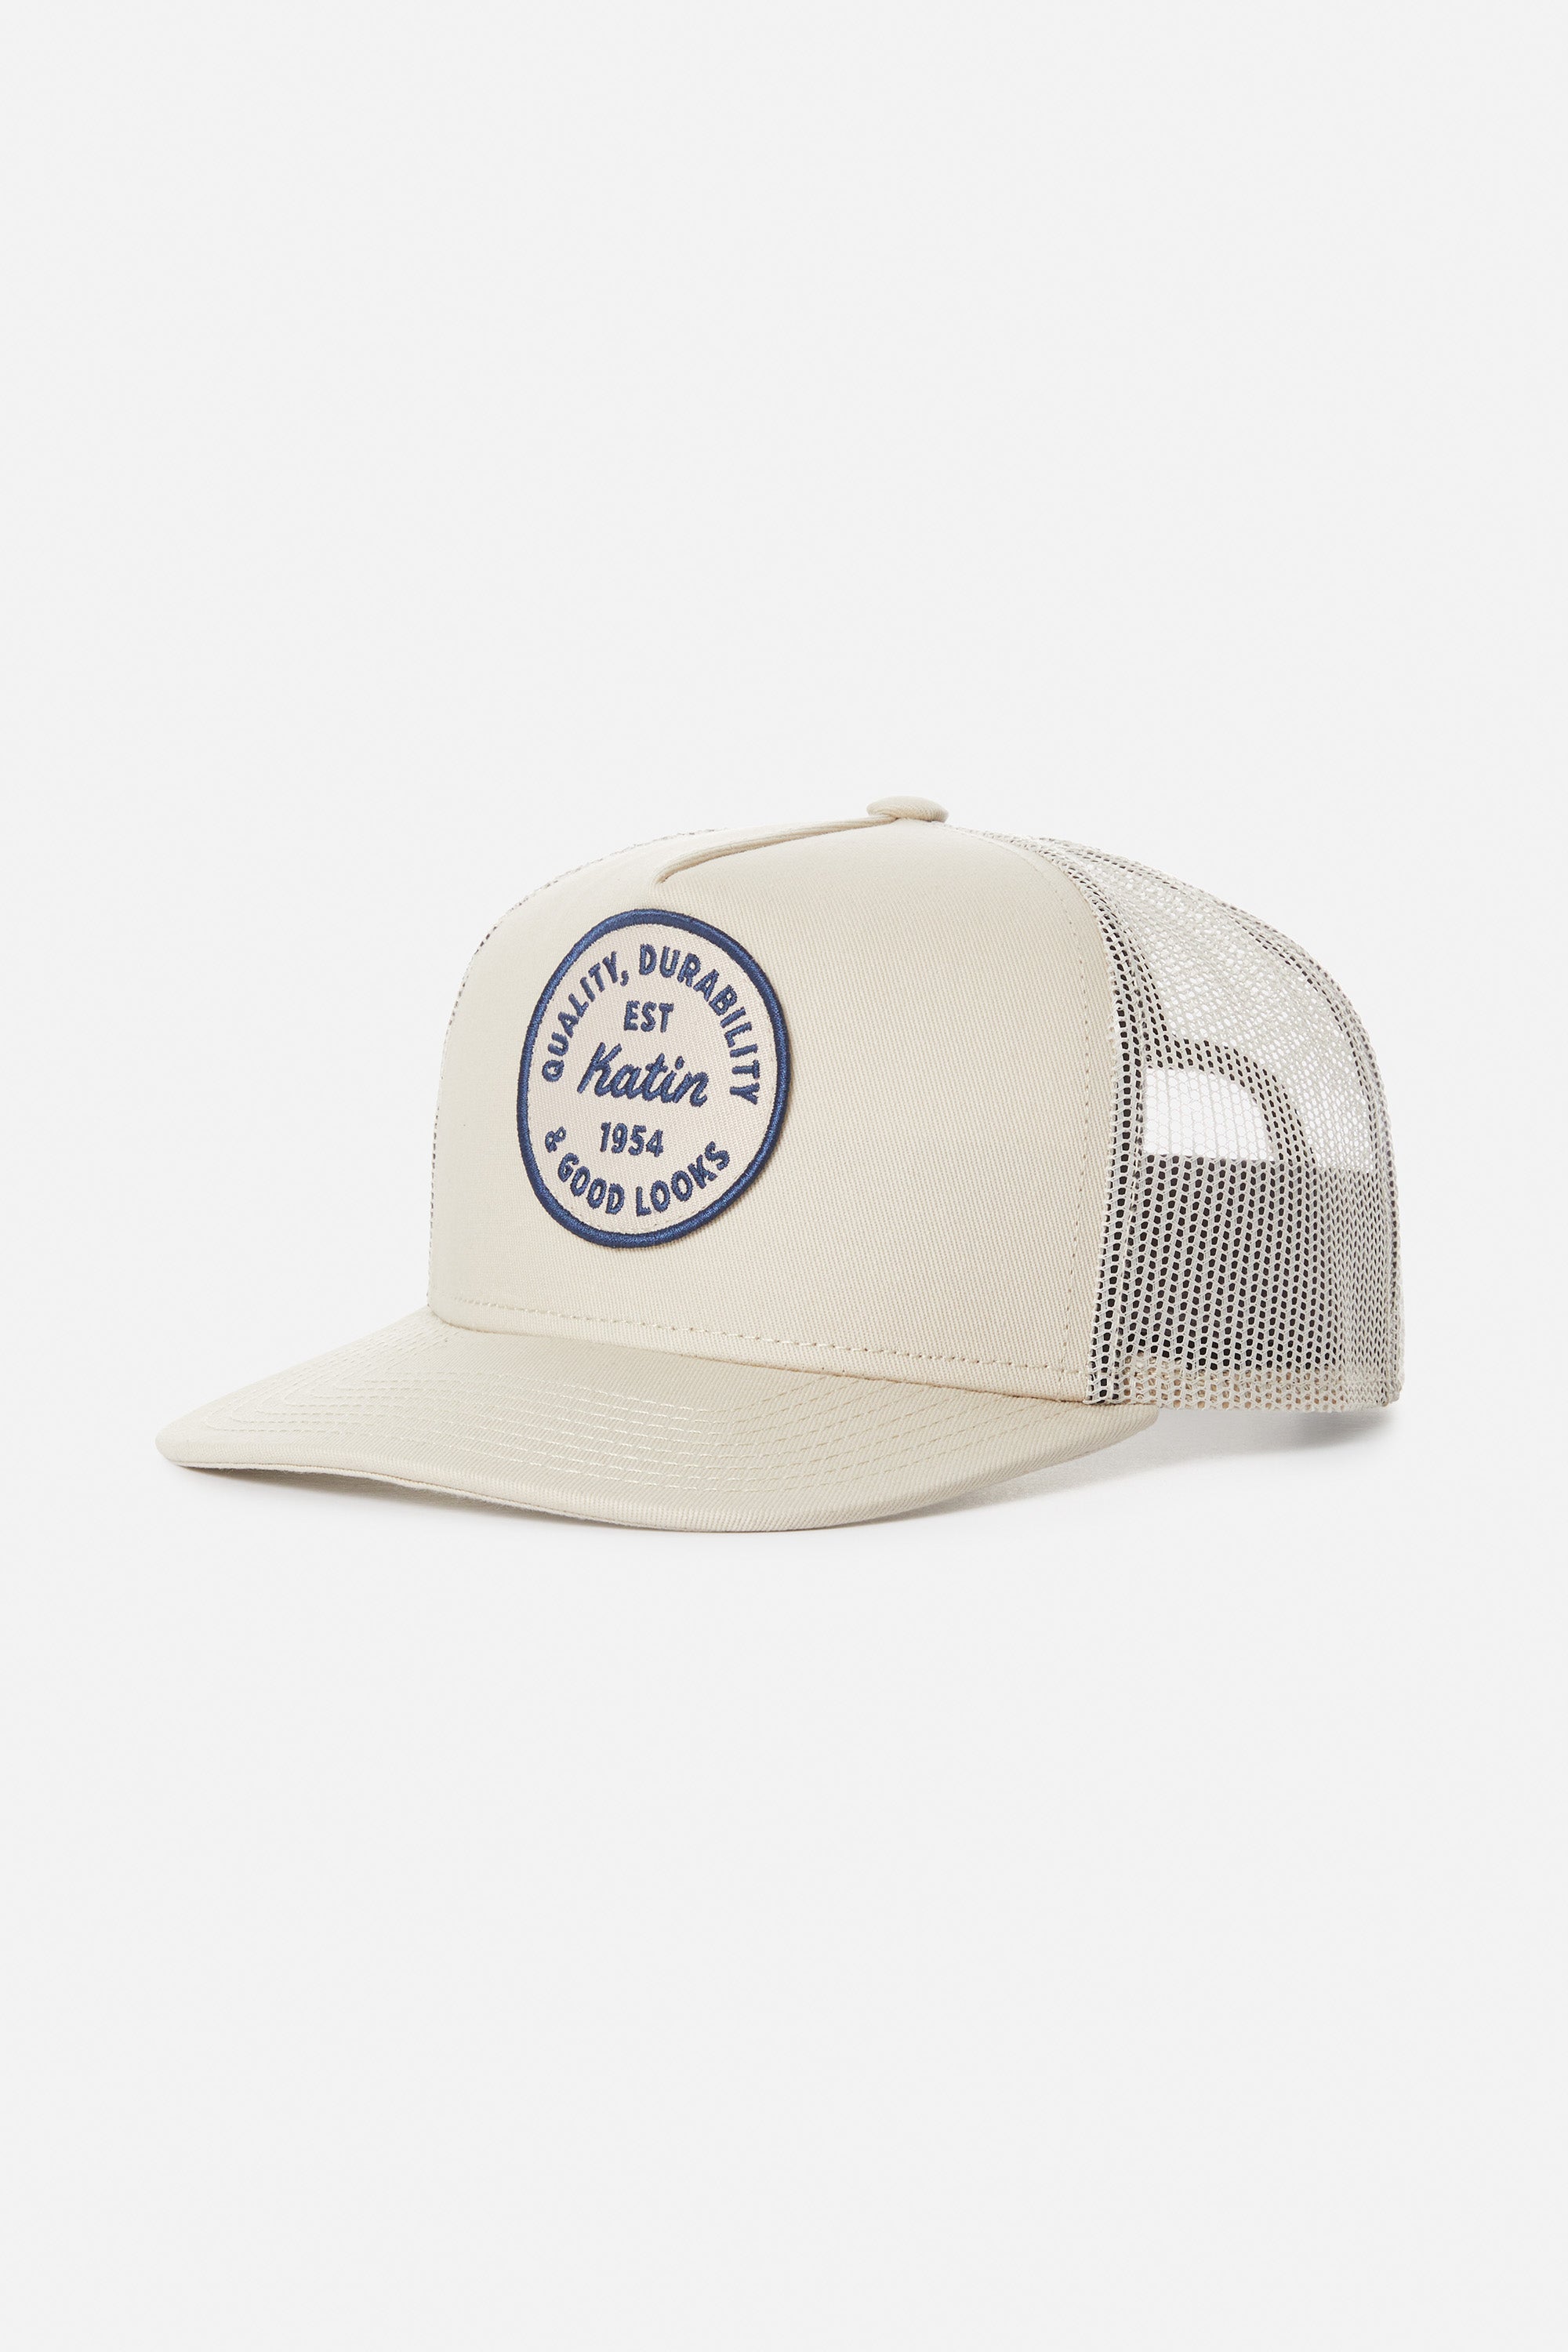 Men's Hats | Trucker, 5 and 6 Panel Hats - Katin USA